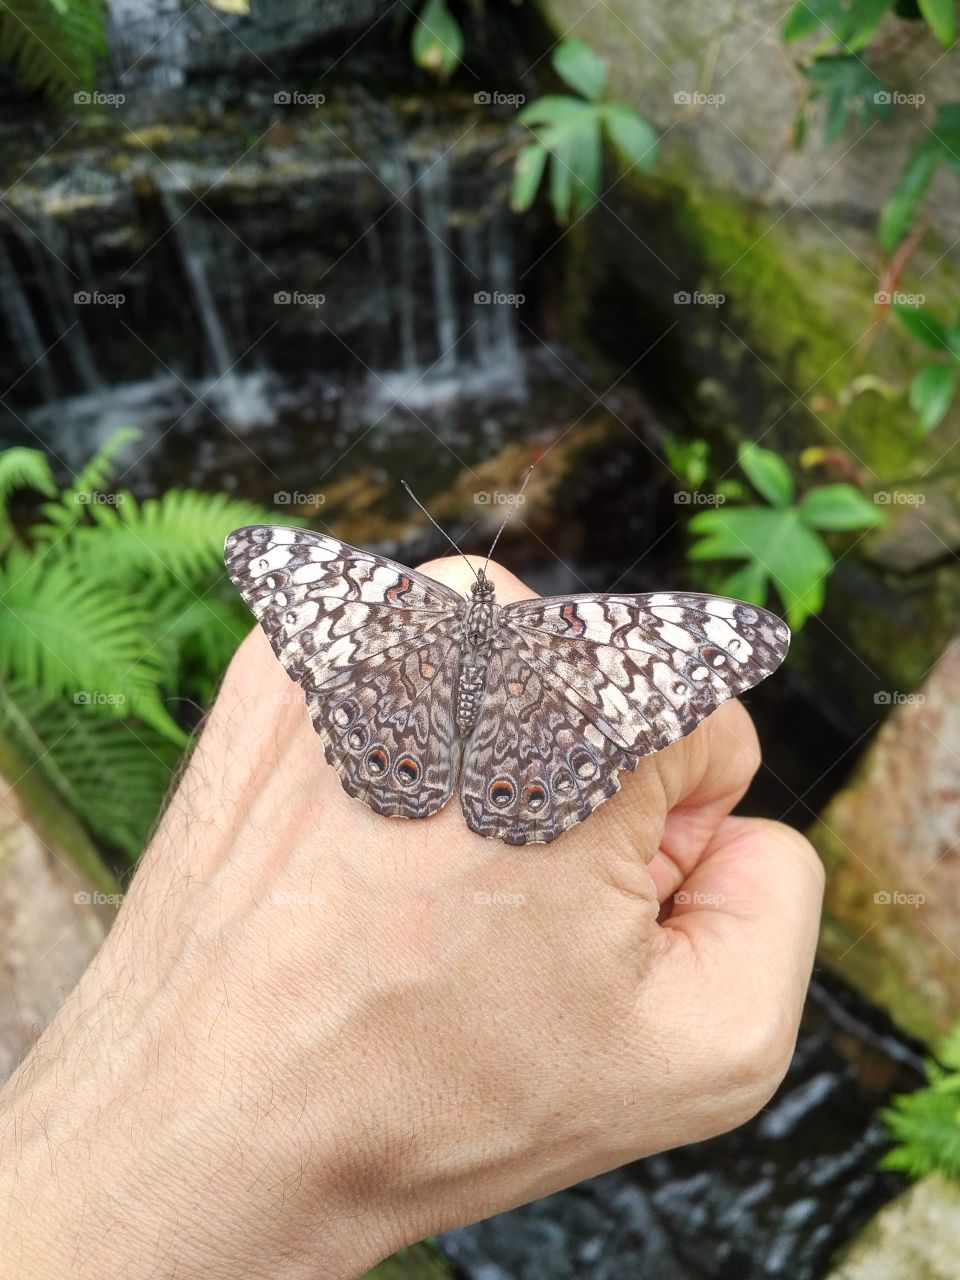 Butterfly sanctuary Niagara Falls Canada